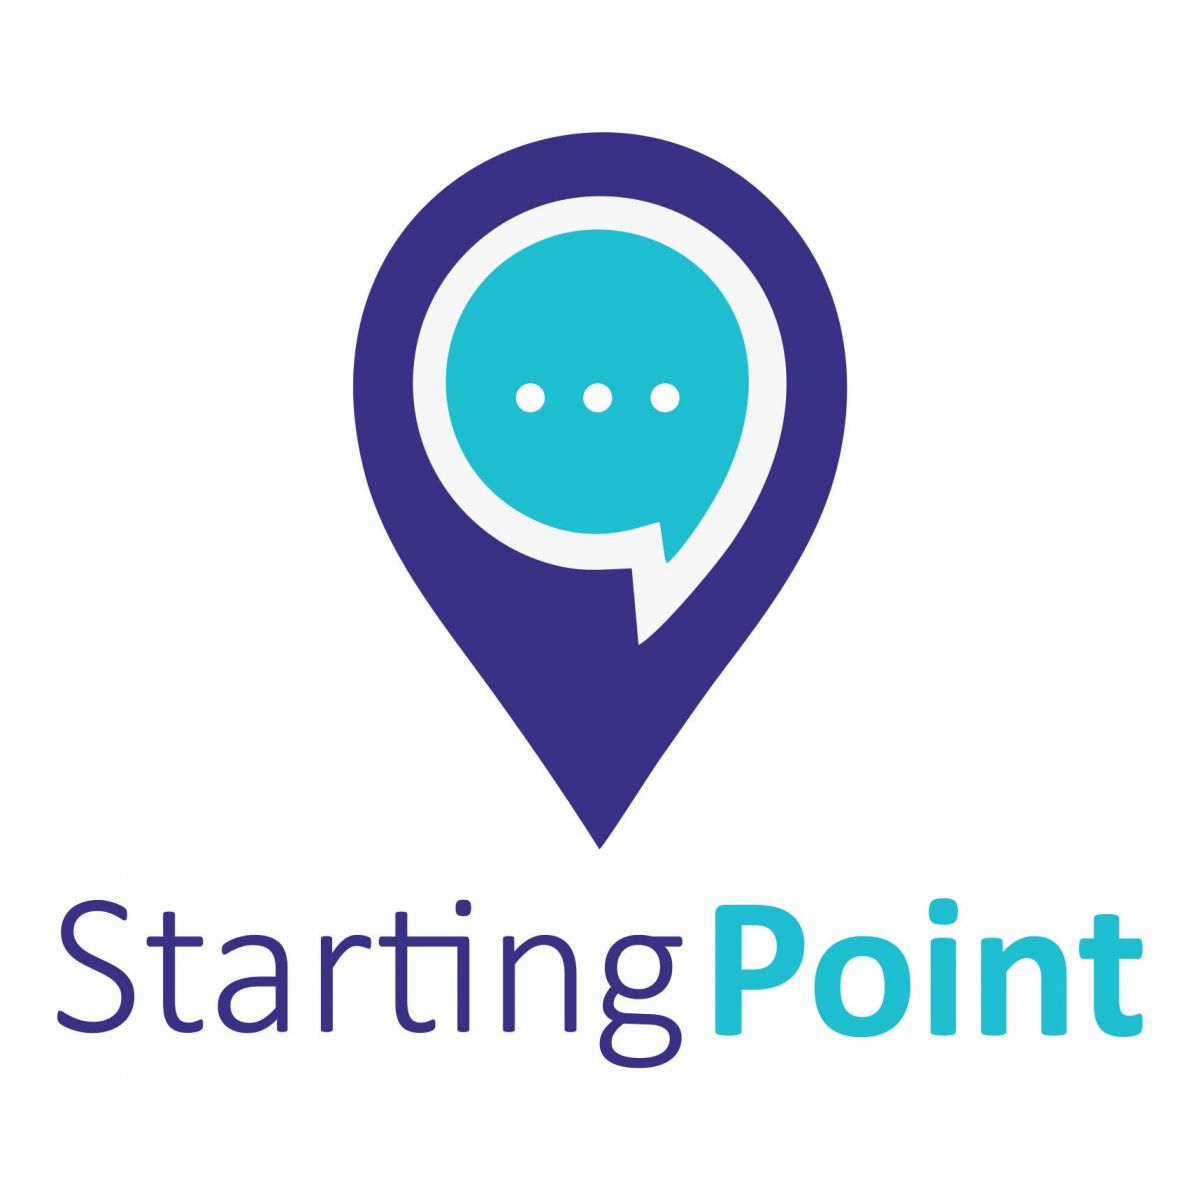 Starting Point logo